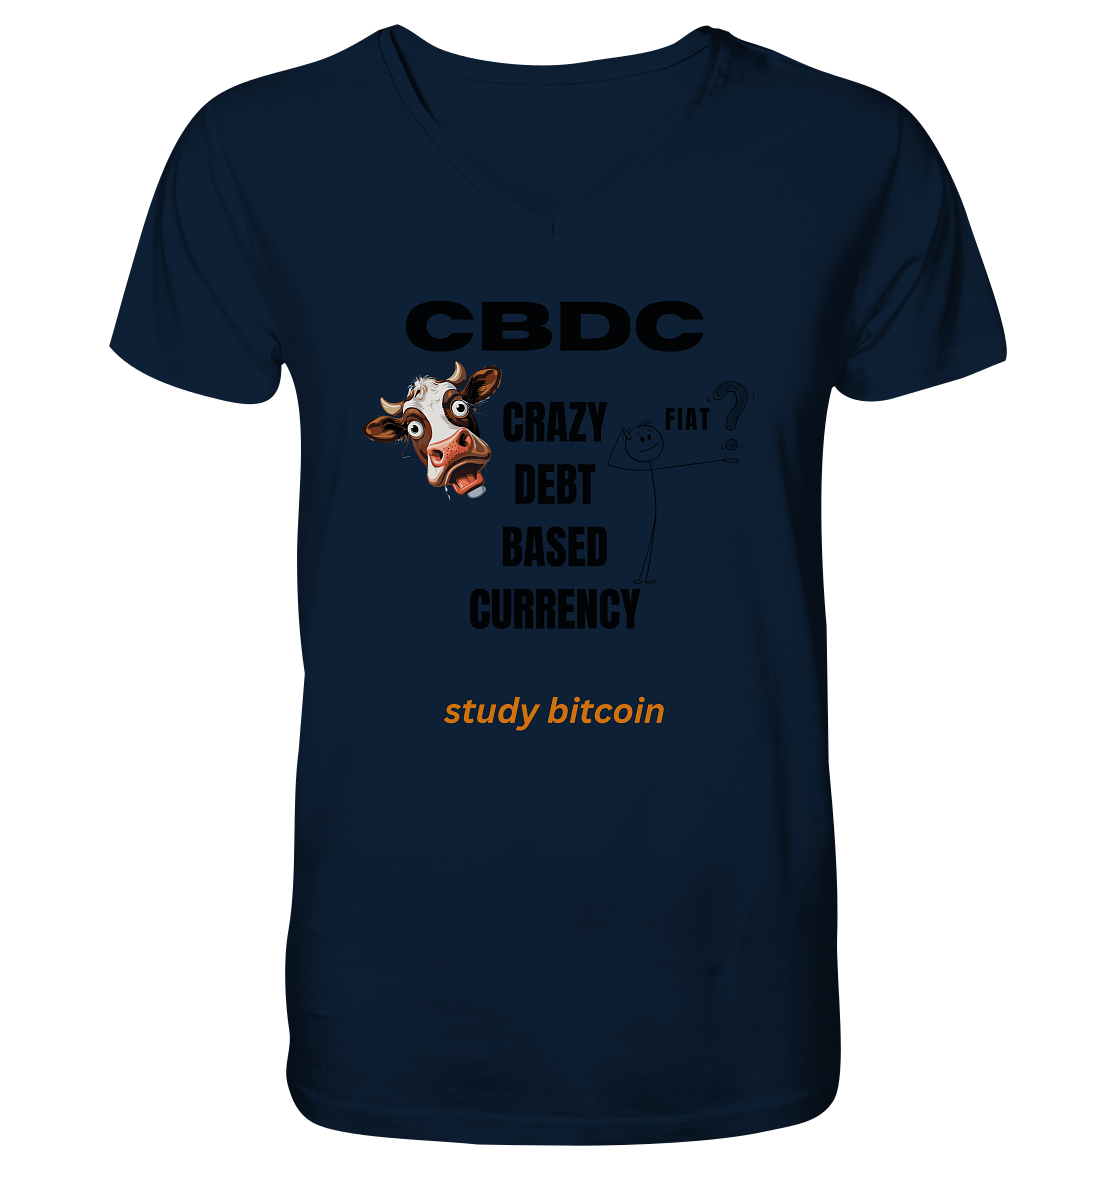 CBDC - CRAZY DEBT BASED CURRENCY - FIAT ? study bitcoin - Mens Organic V-Neck Shirt